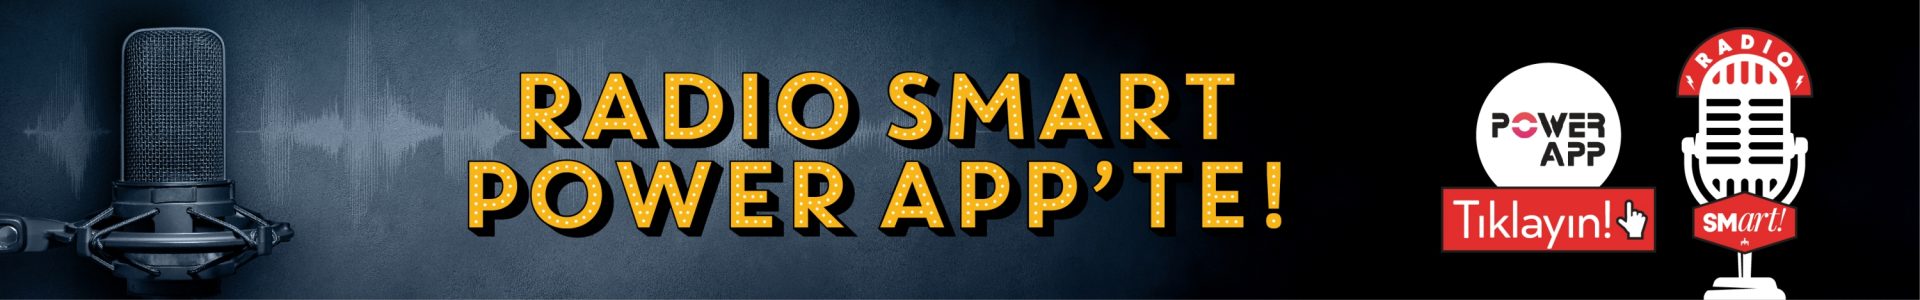 SM Radio SMart - Power App Banner-02